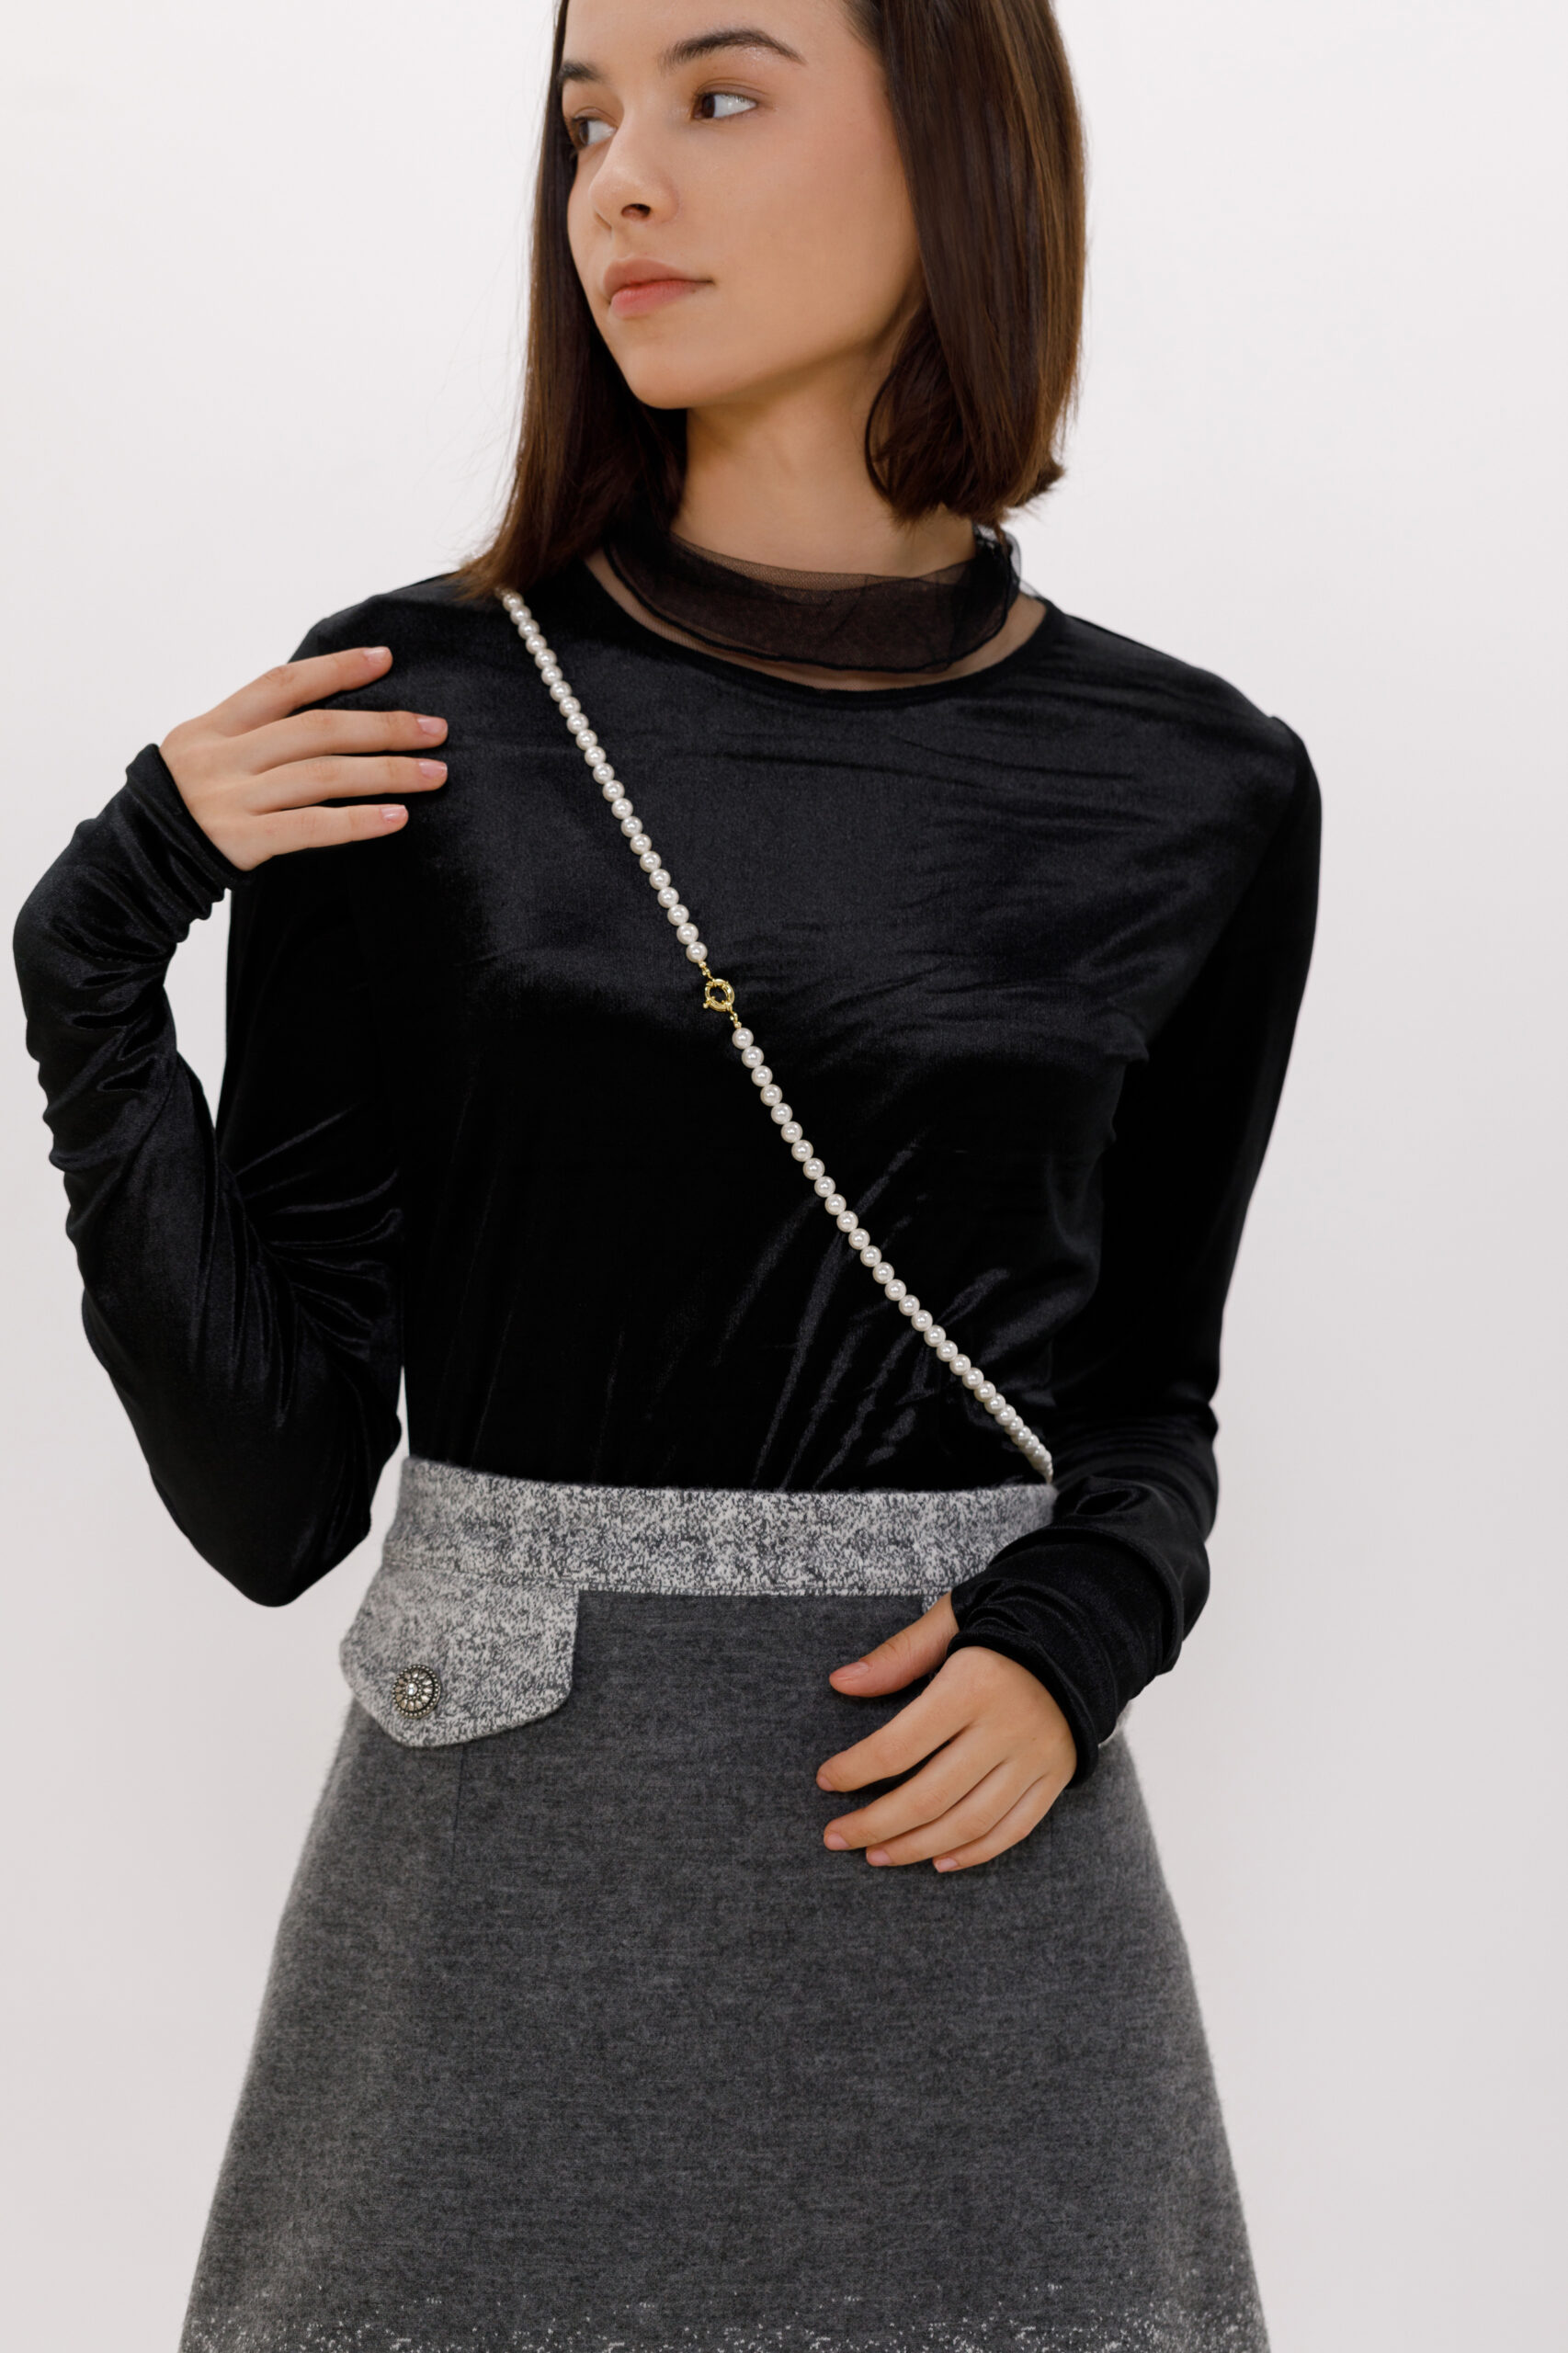 XENI 2 elegant turtleneck in black velvet with tulle collar. Natural fabrics, original design, handmade embroidery